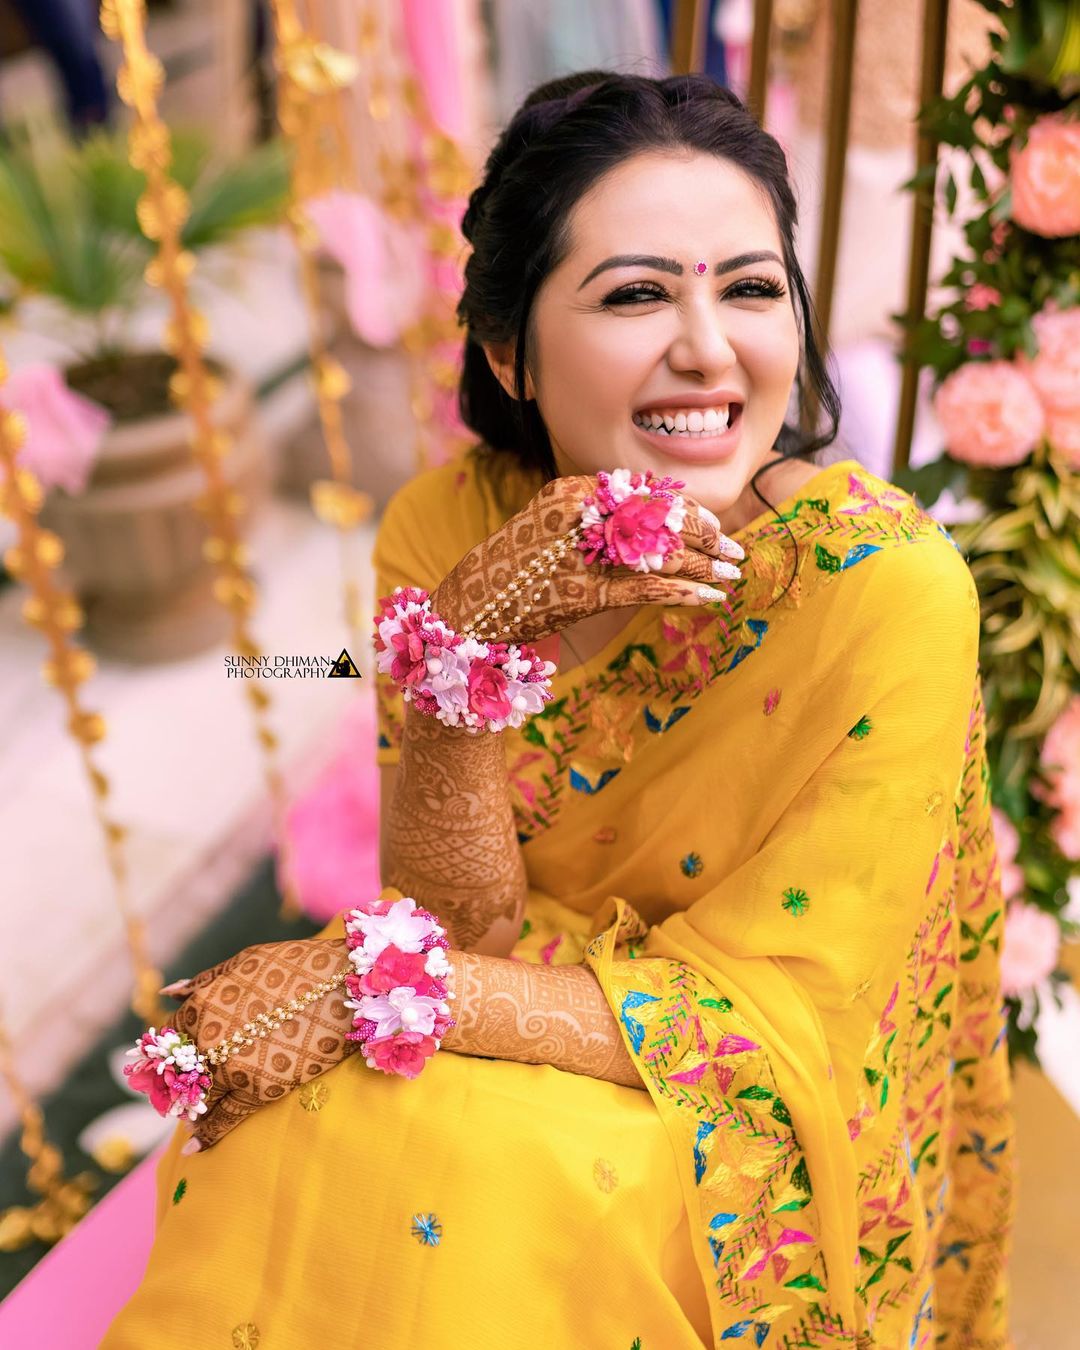 Haldi photoshoot poses for brides pic ideas 